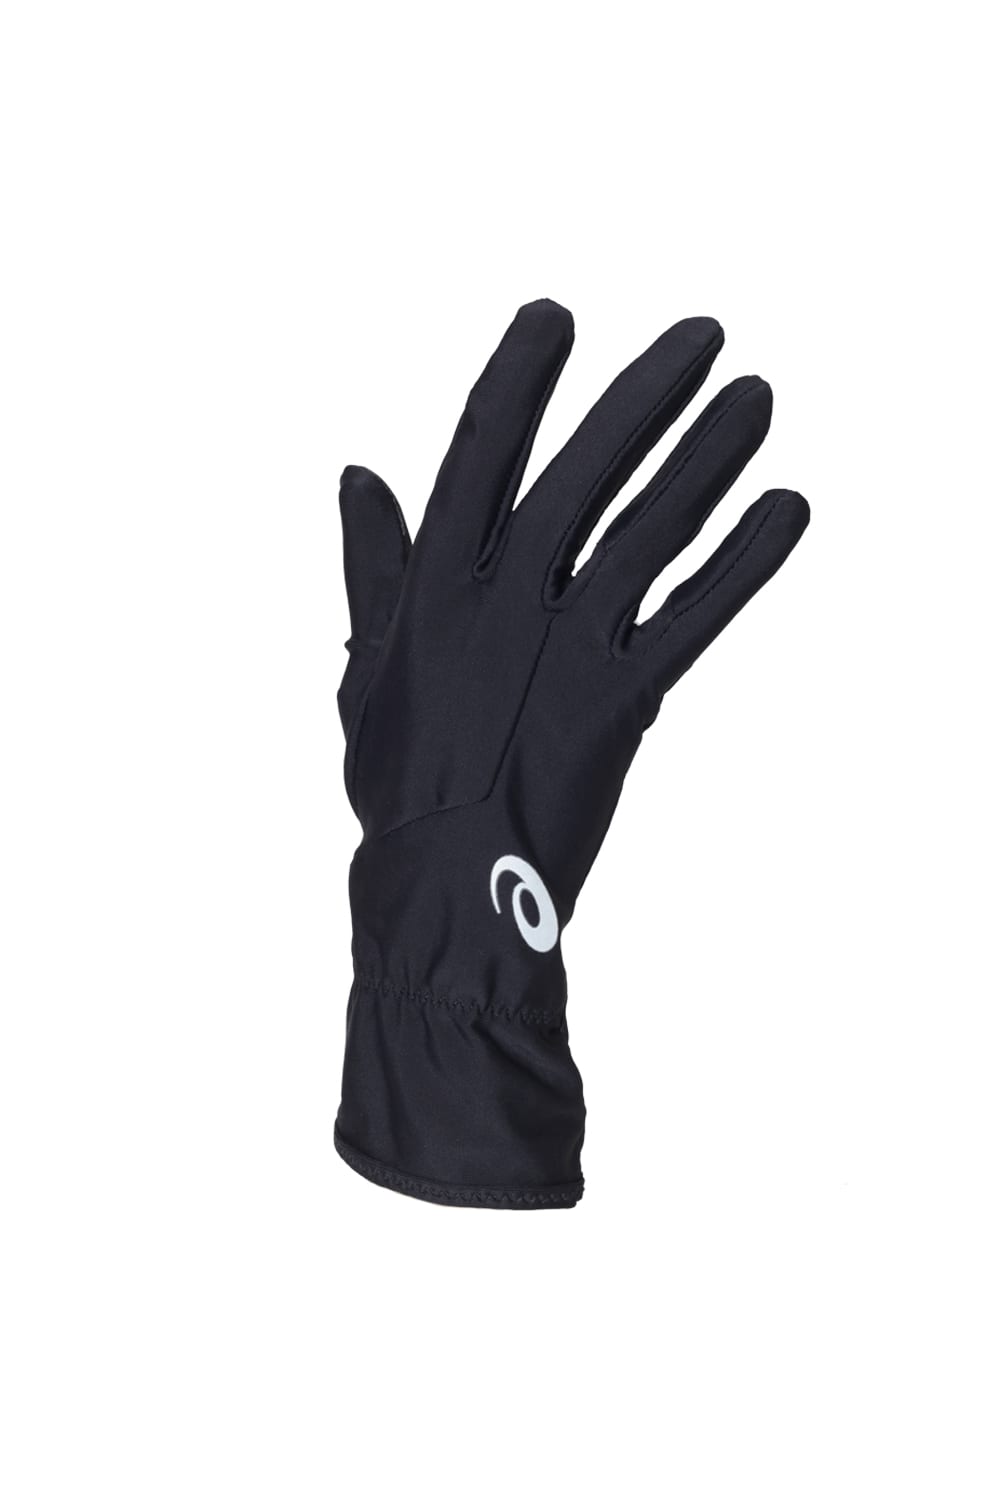 Womens/Ladies Running Gloves - Black